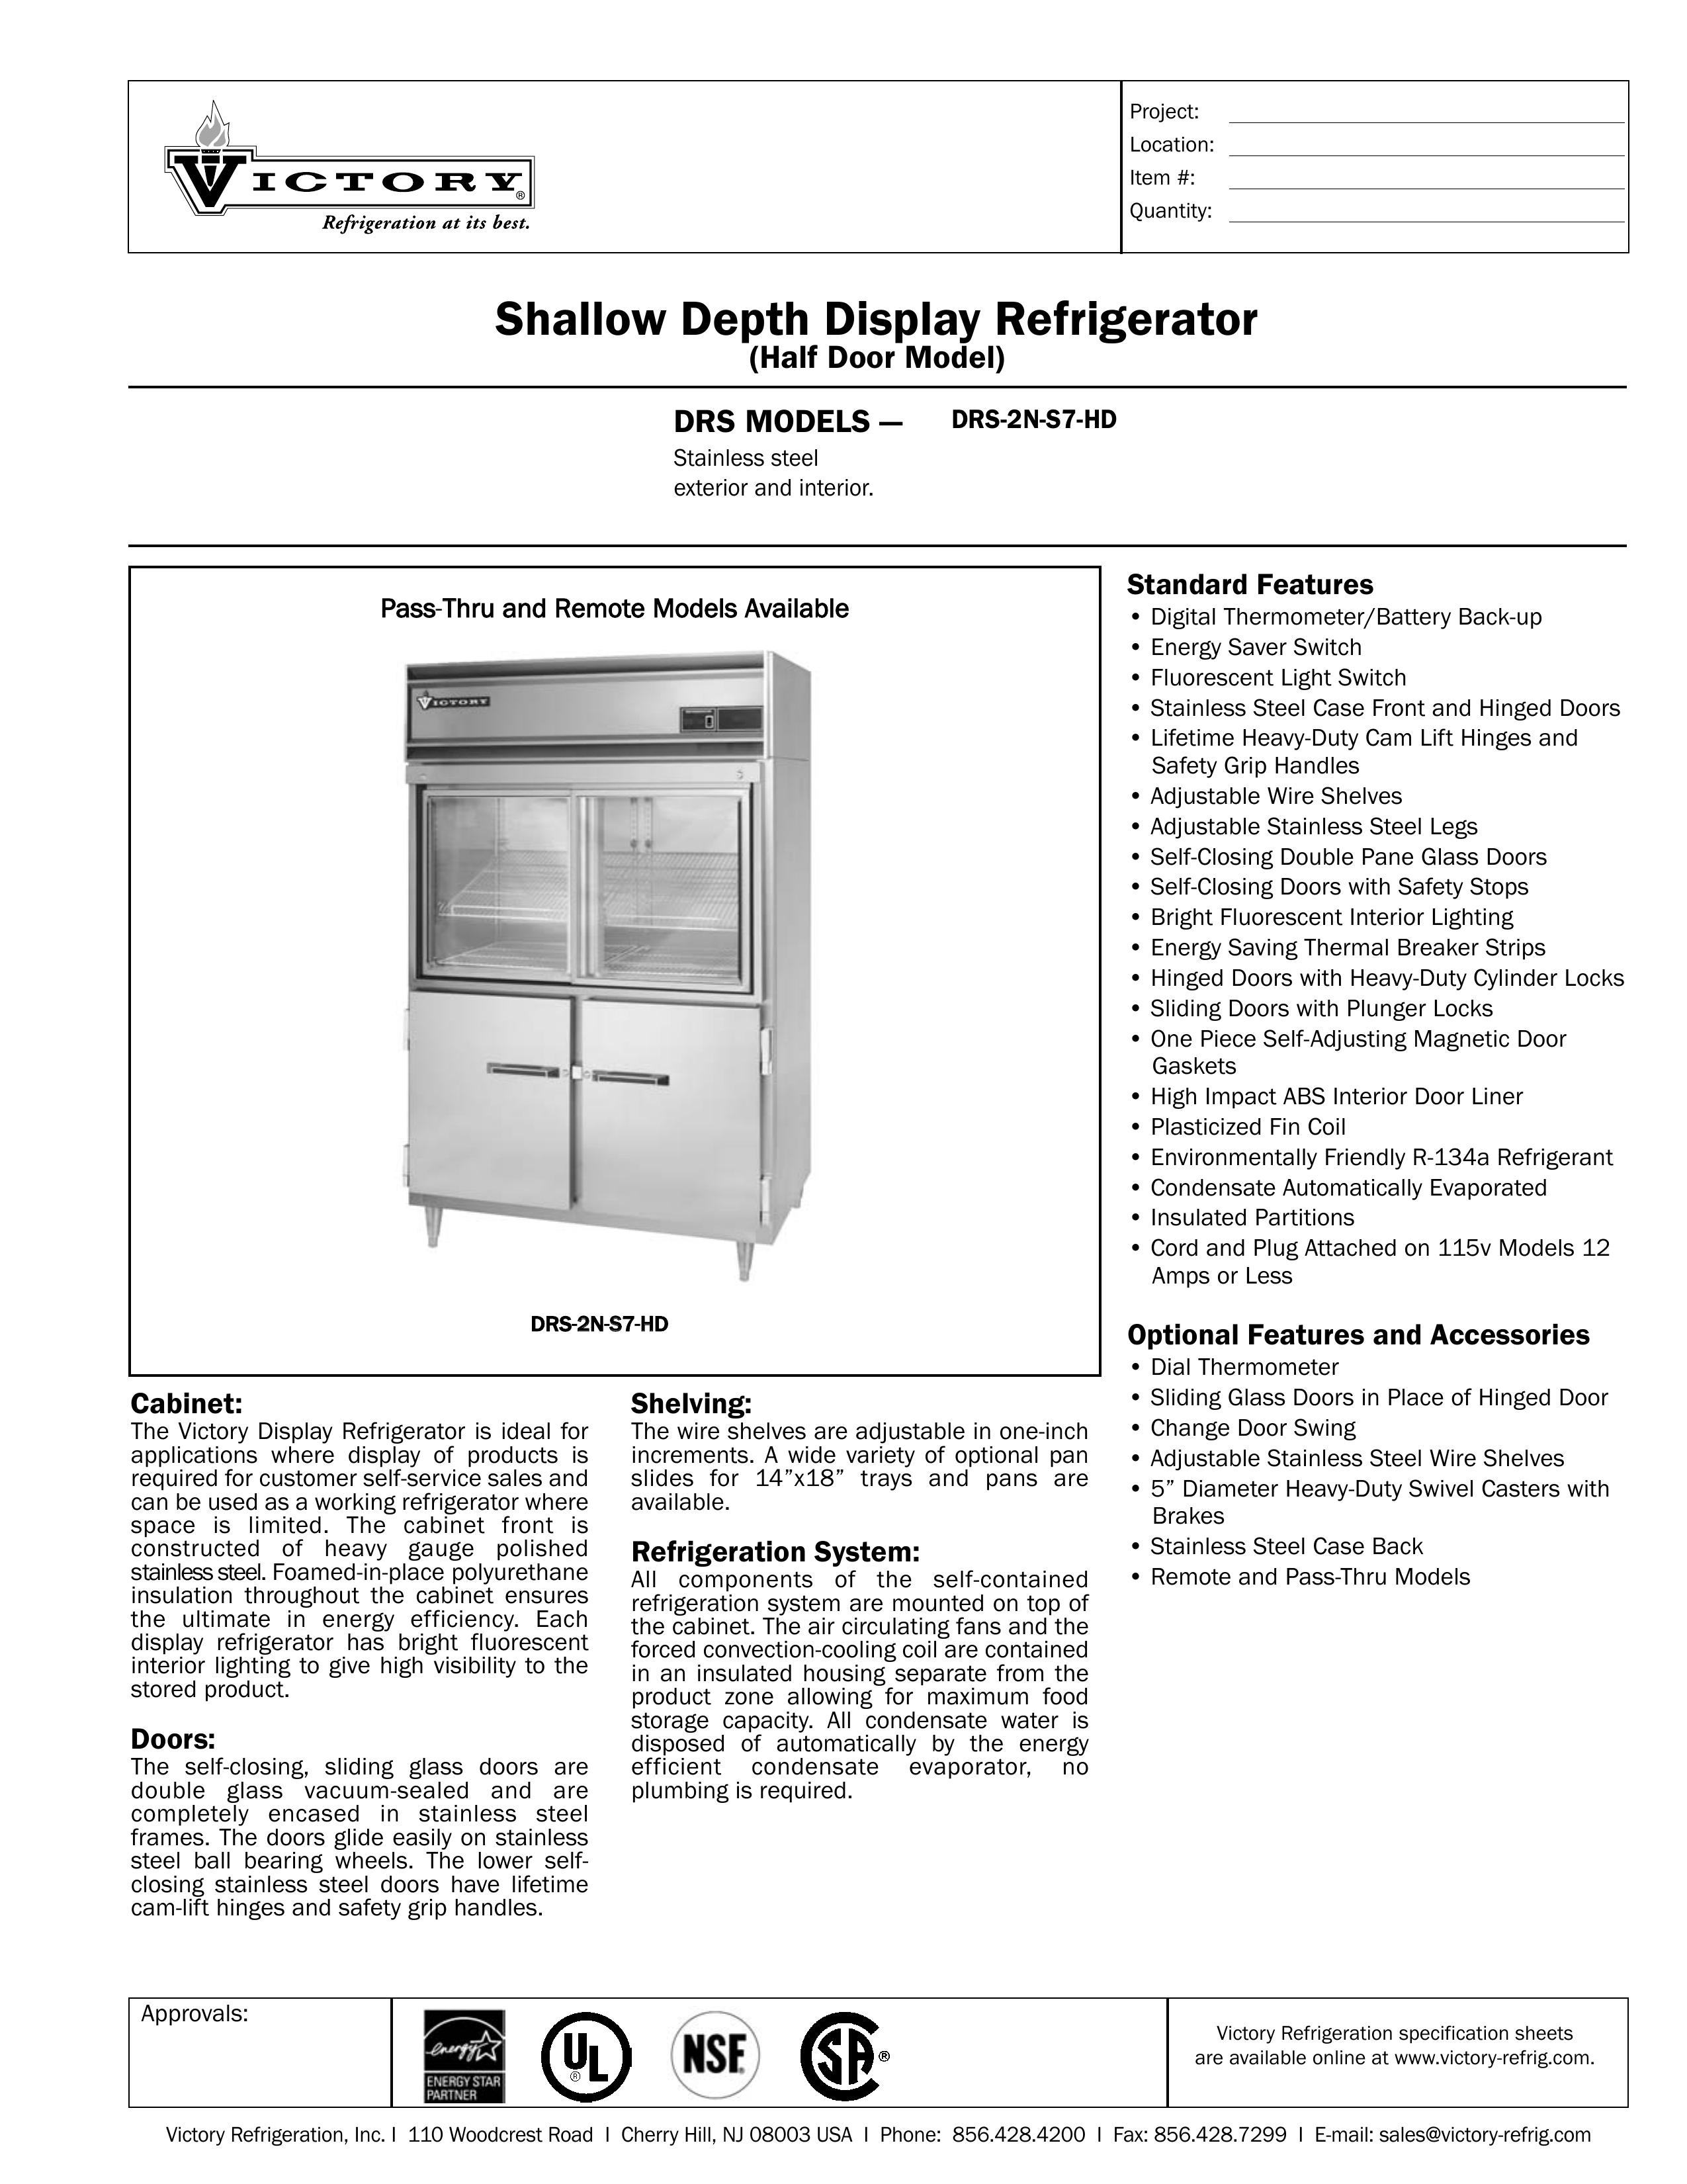 Victory Refrigeration DRS-2N-S7-HD Refrigerator User Manual